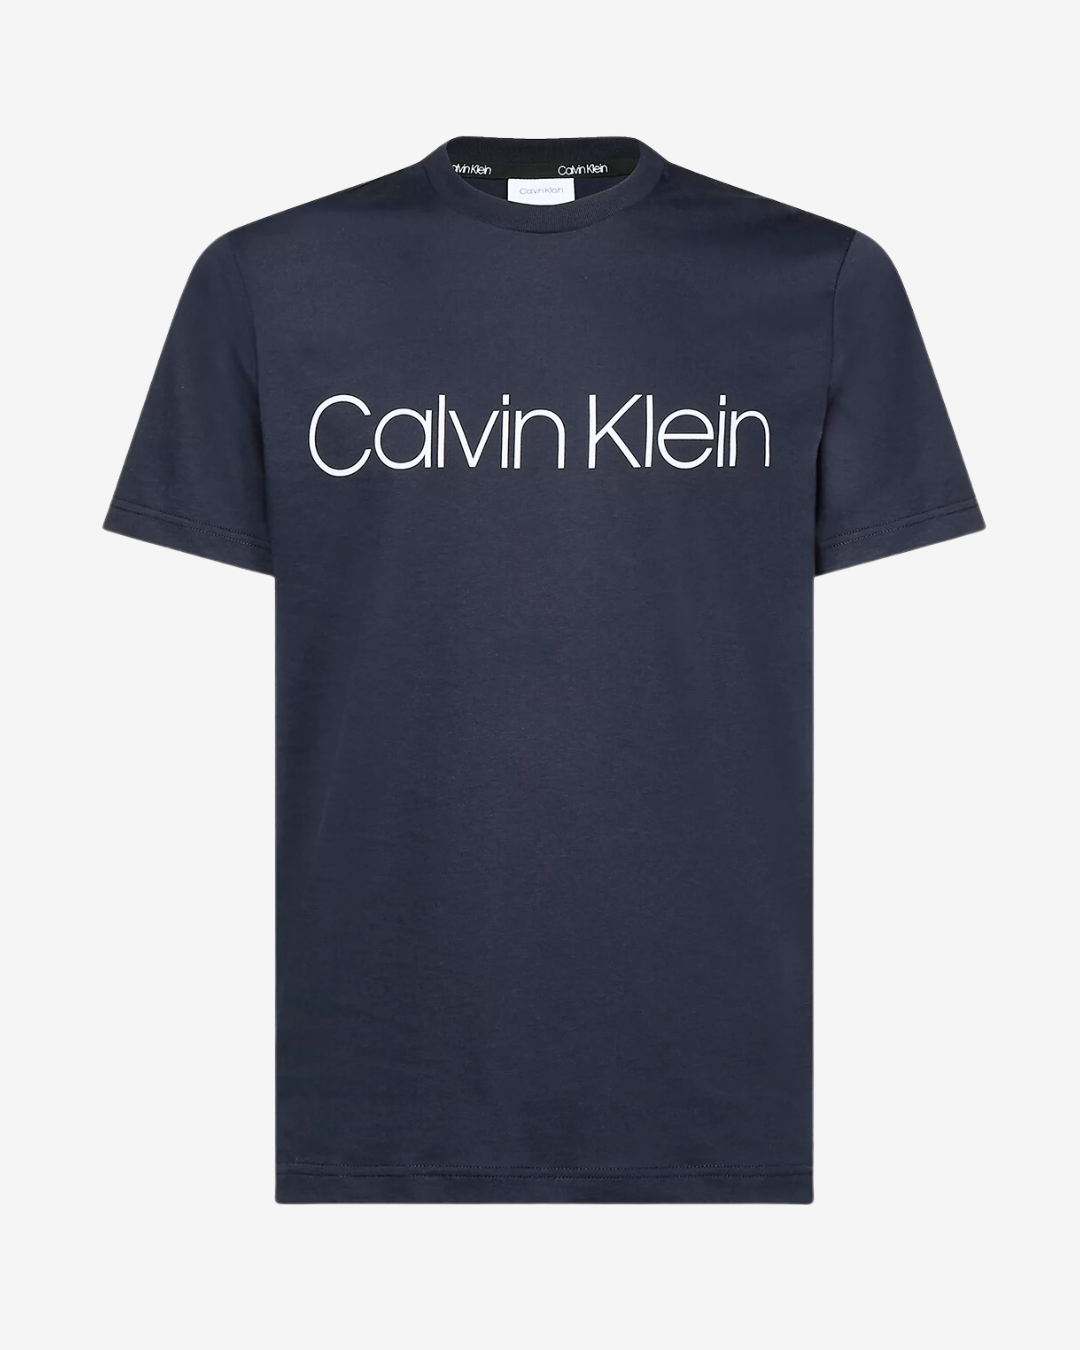 Billede af Calvin Klein Front logo t-shirt - Navy - Str. XXL - Modish.dk